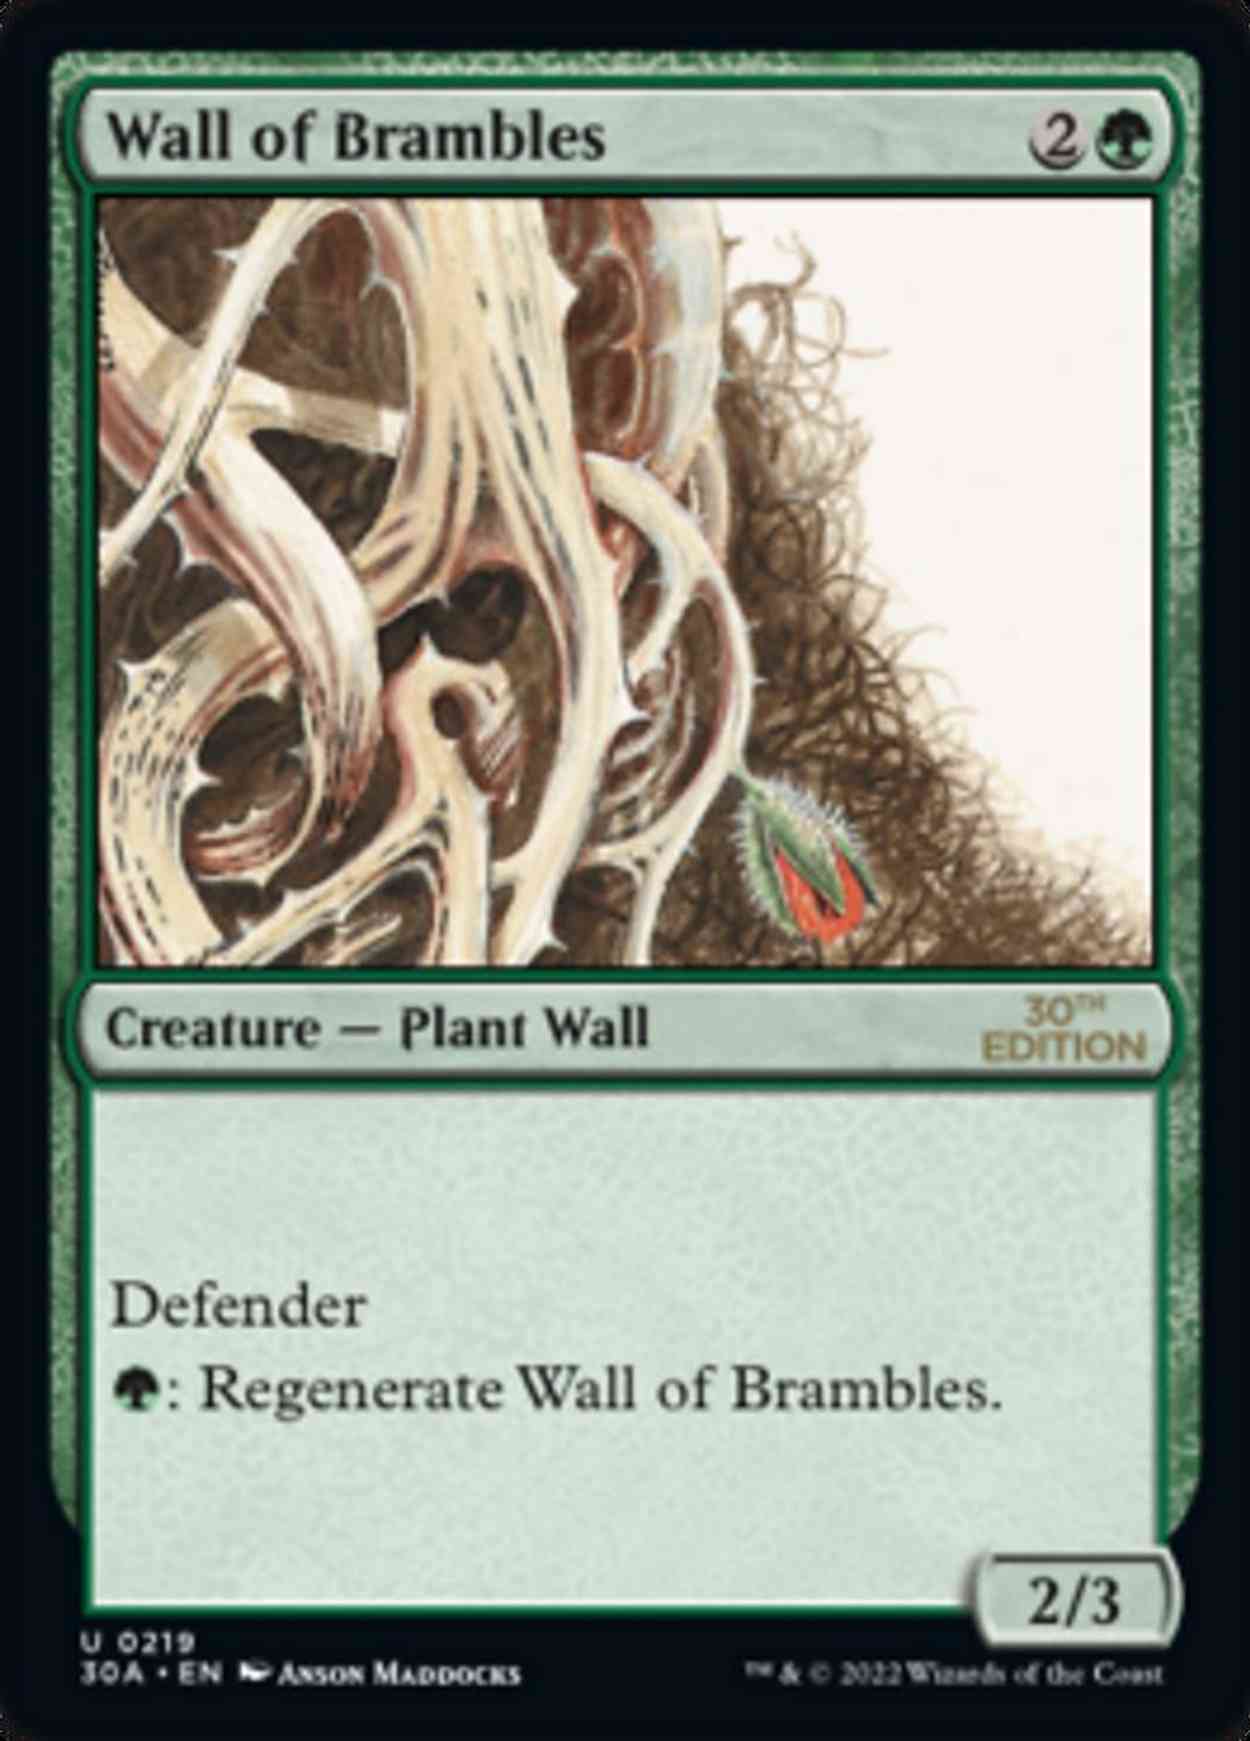 Wall of Brambles magic card front